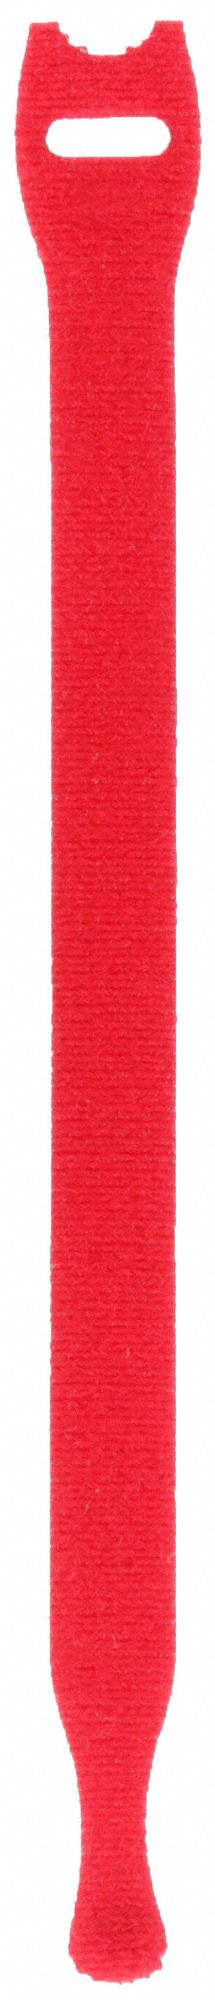 Velcro Brand Hook-and-Loop Cable Tie,8 in,Black,PK900 170091